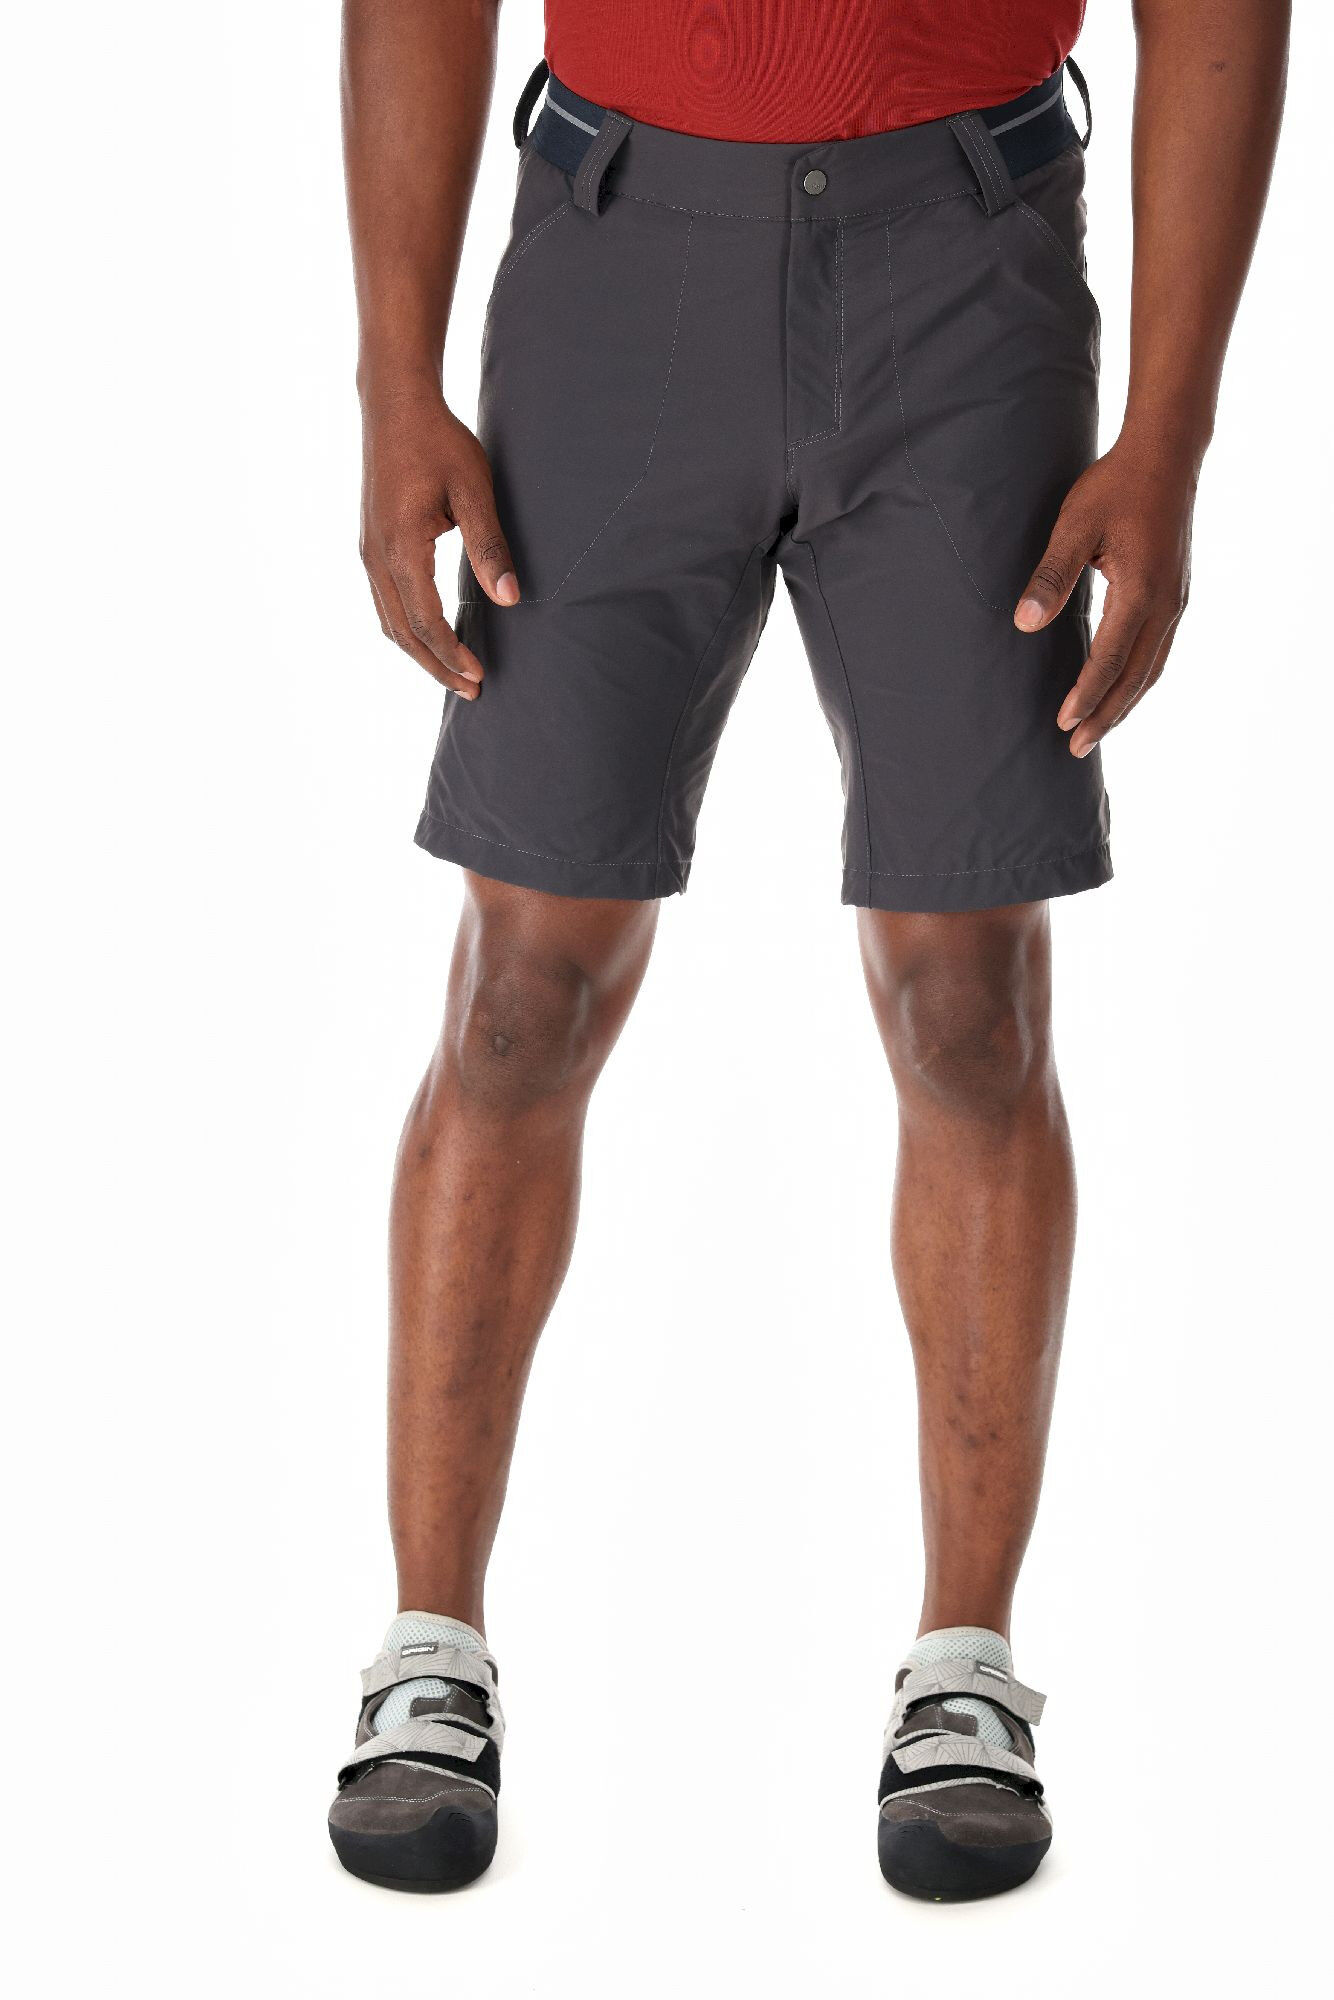 Rab Venant Shorts - Pantalones cortos de escalada - Hombre | Hardloop